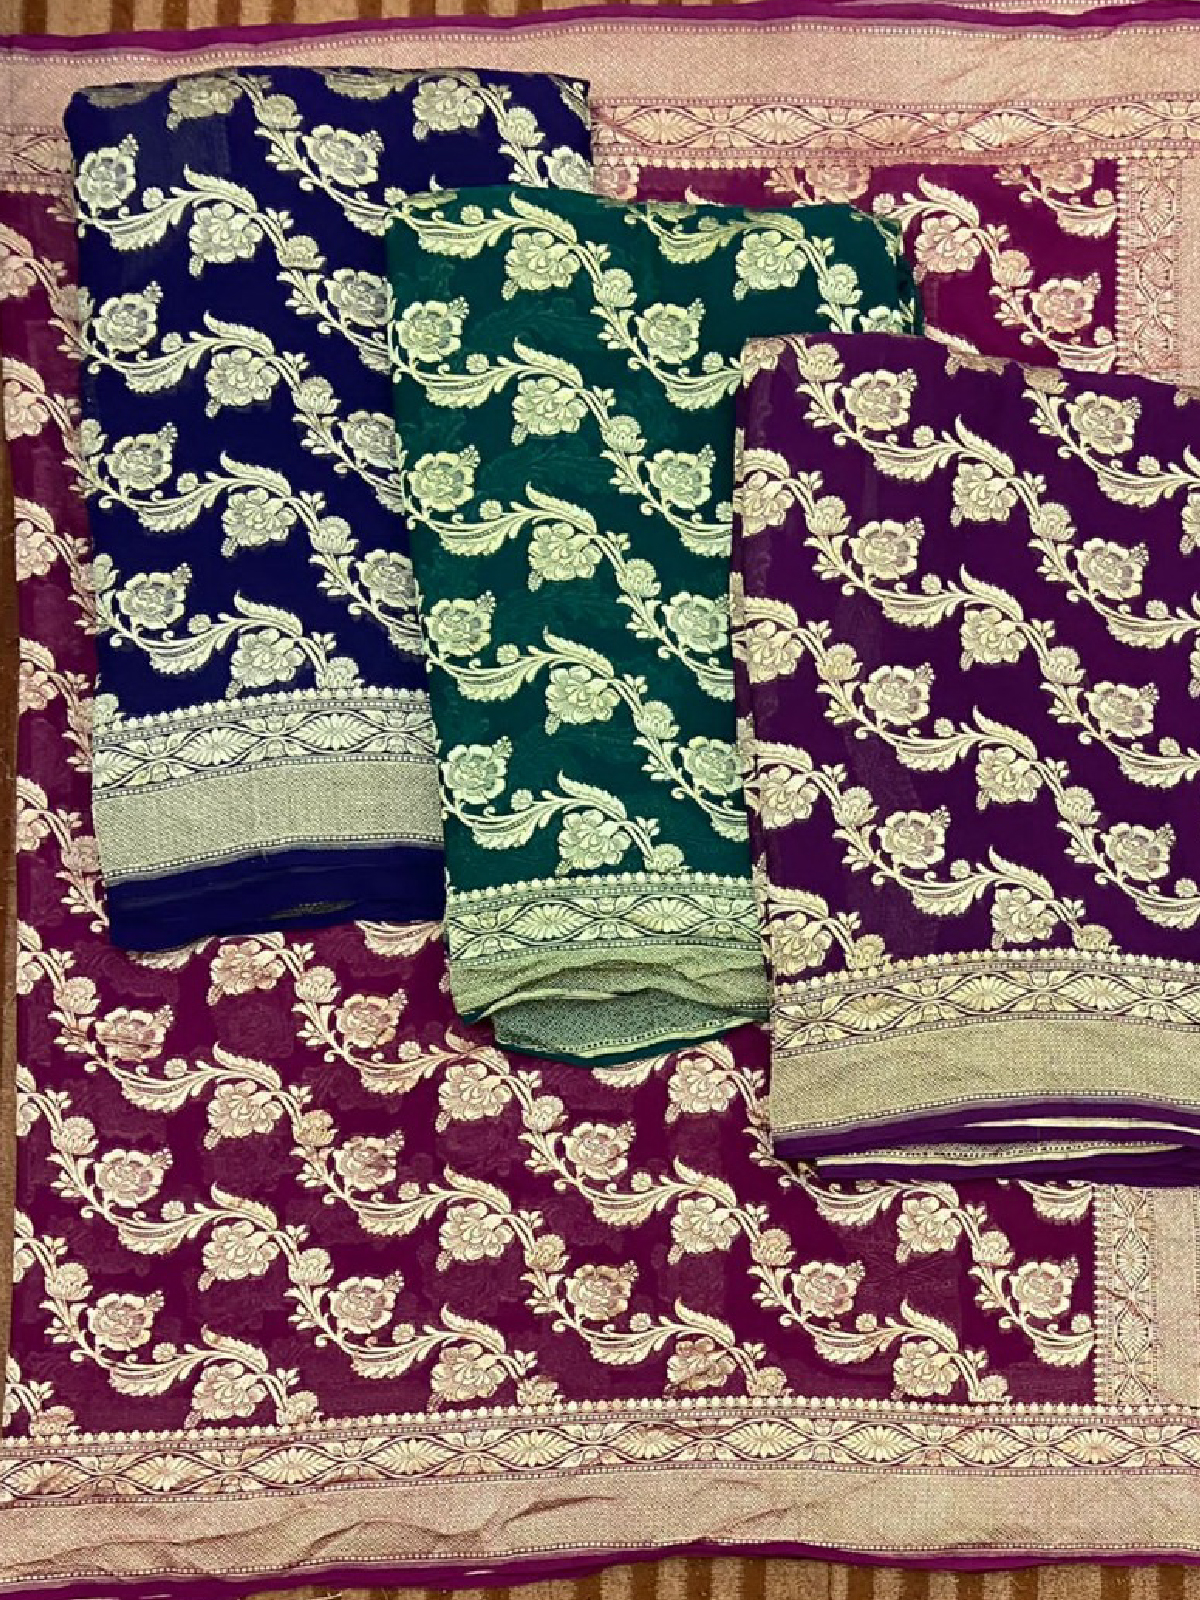  Wide range of saree